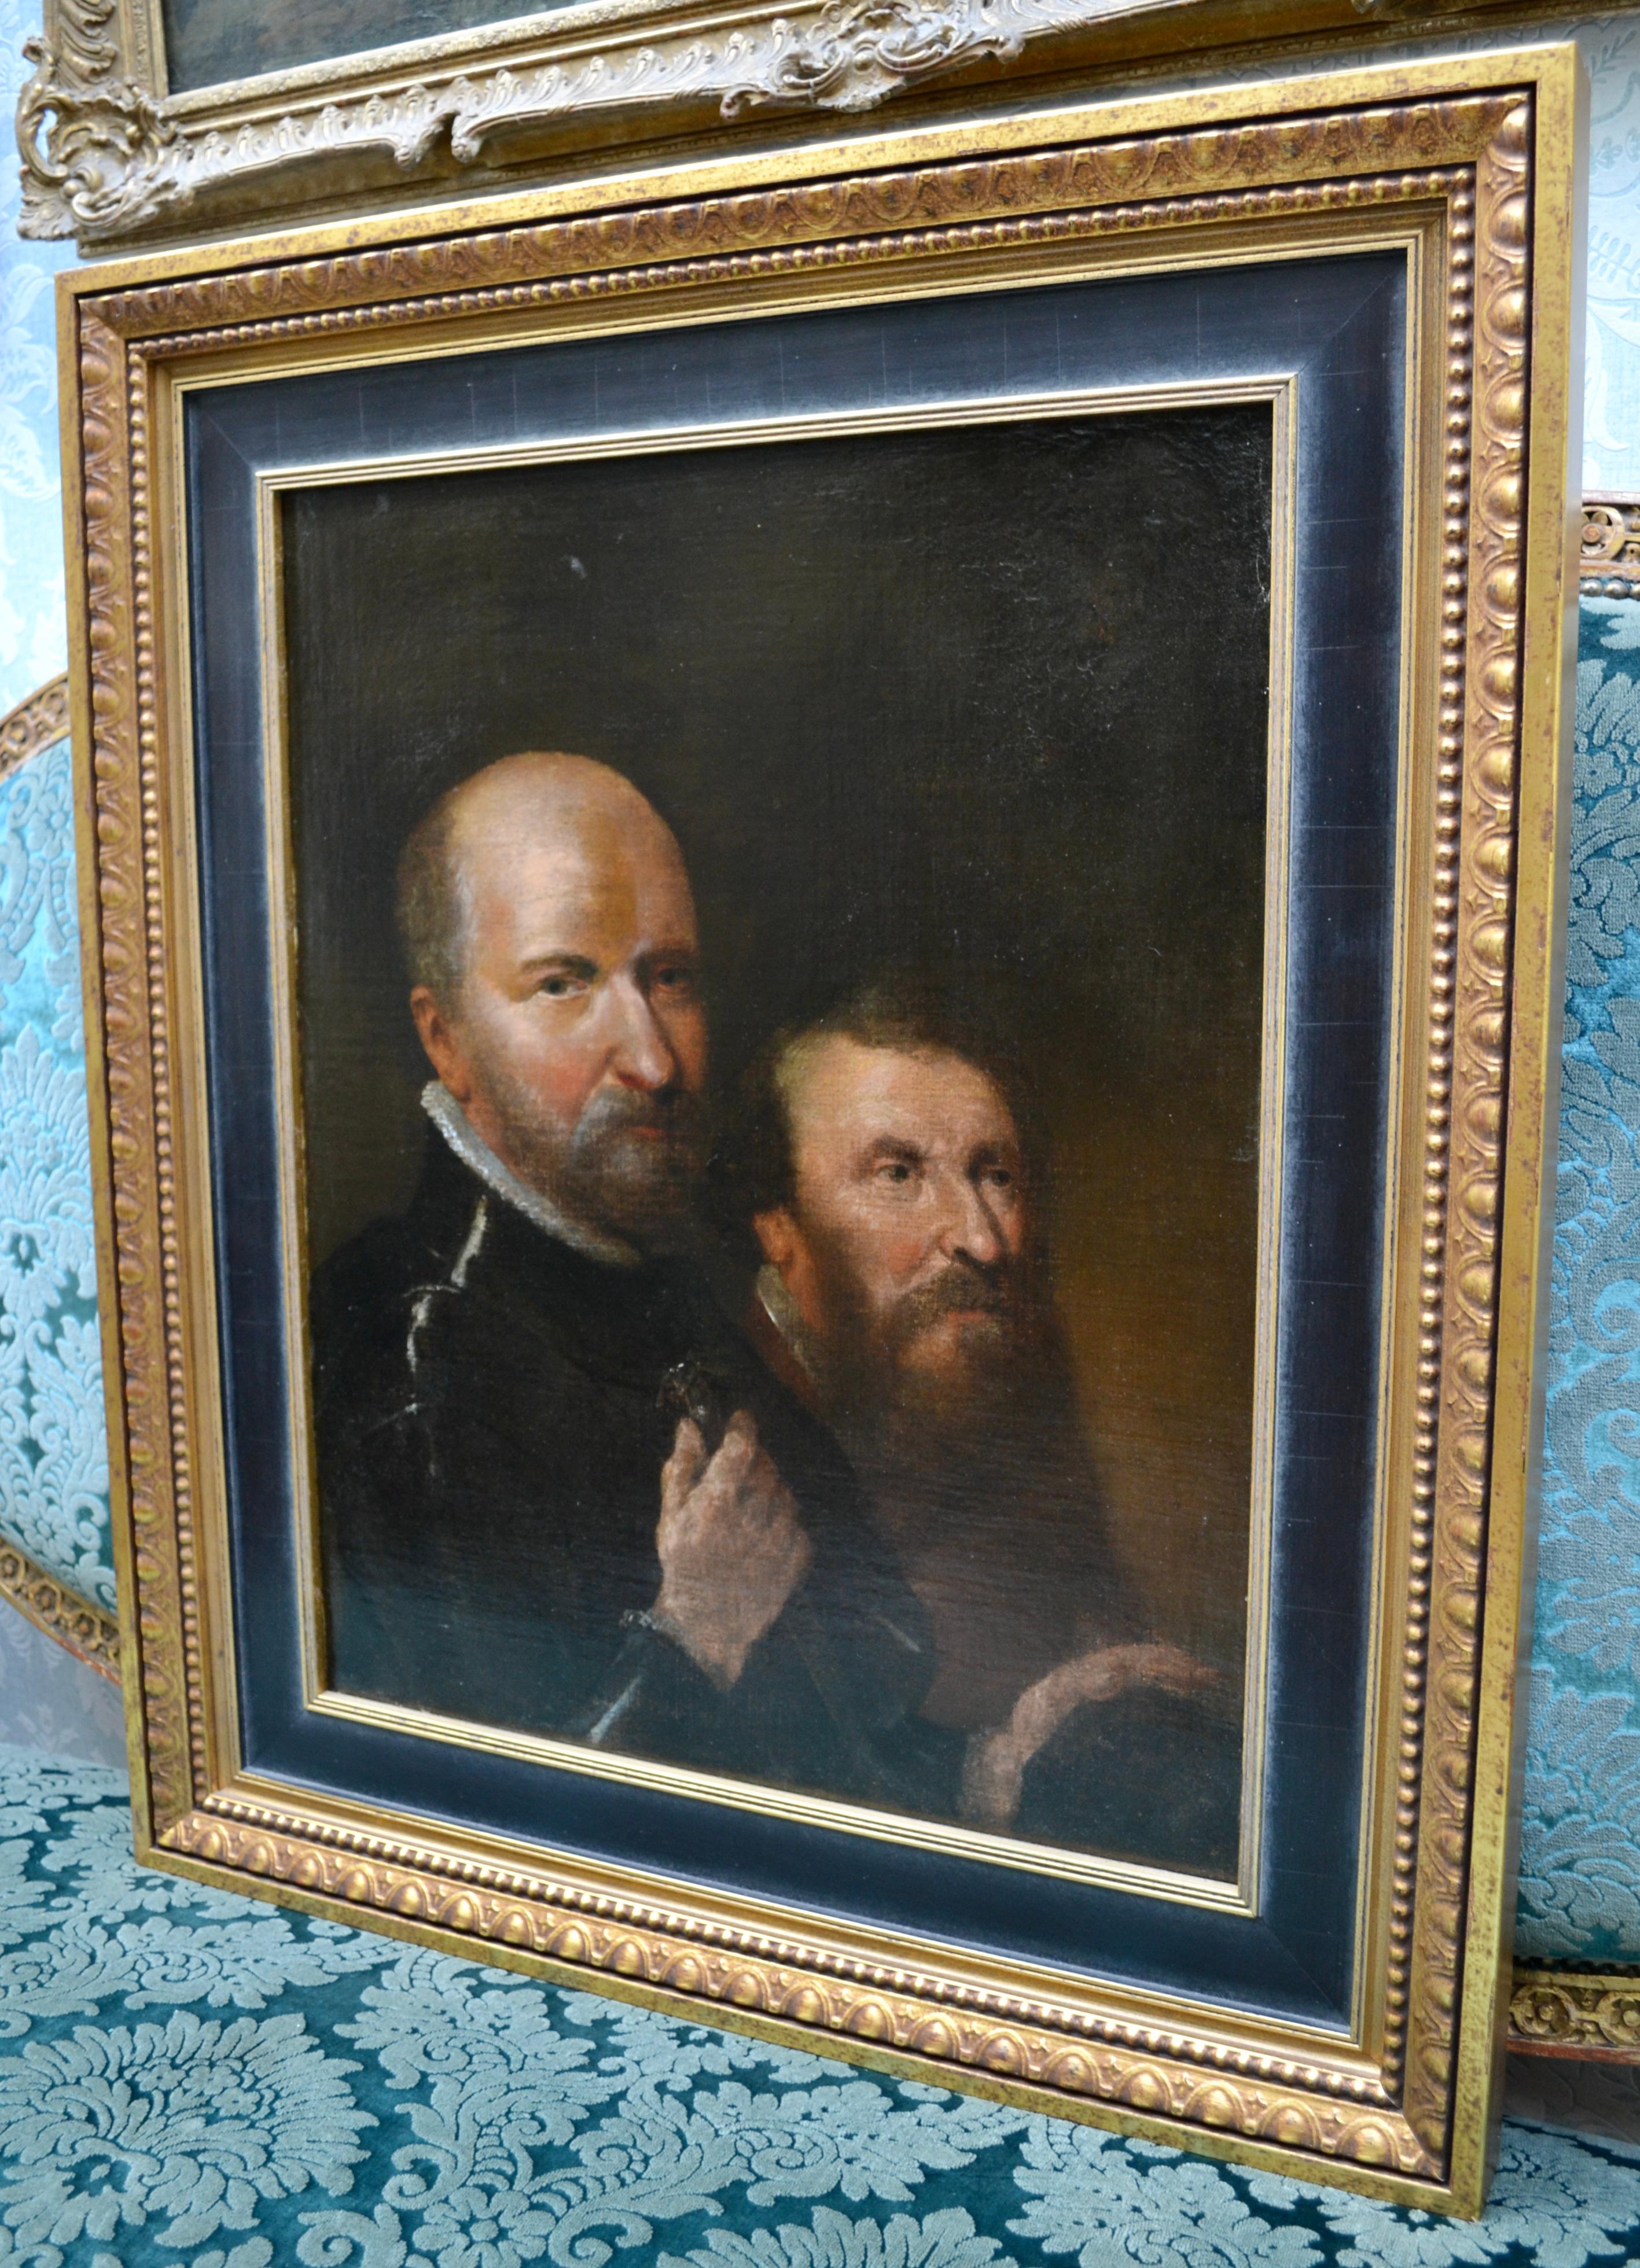 18th century beard